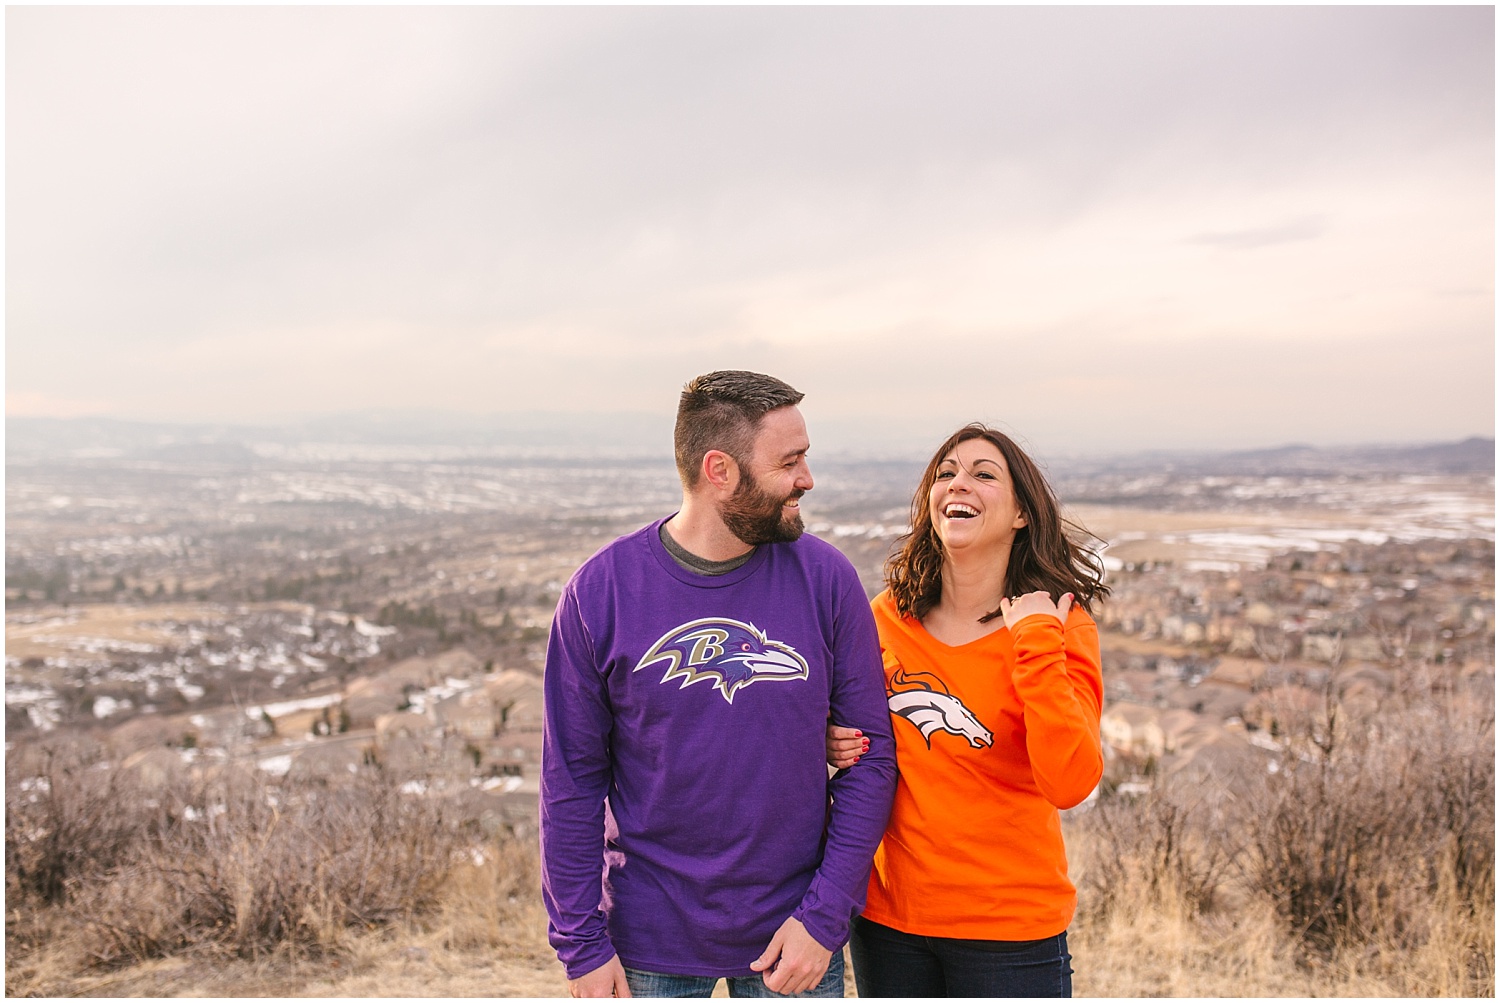 Castle Rock Colorado engagement photos in football jerseys at Ridgeline Open Space.